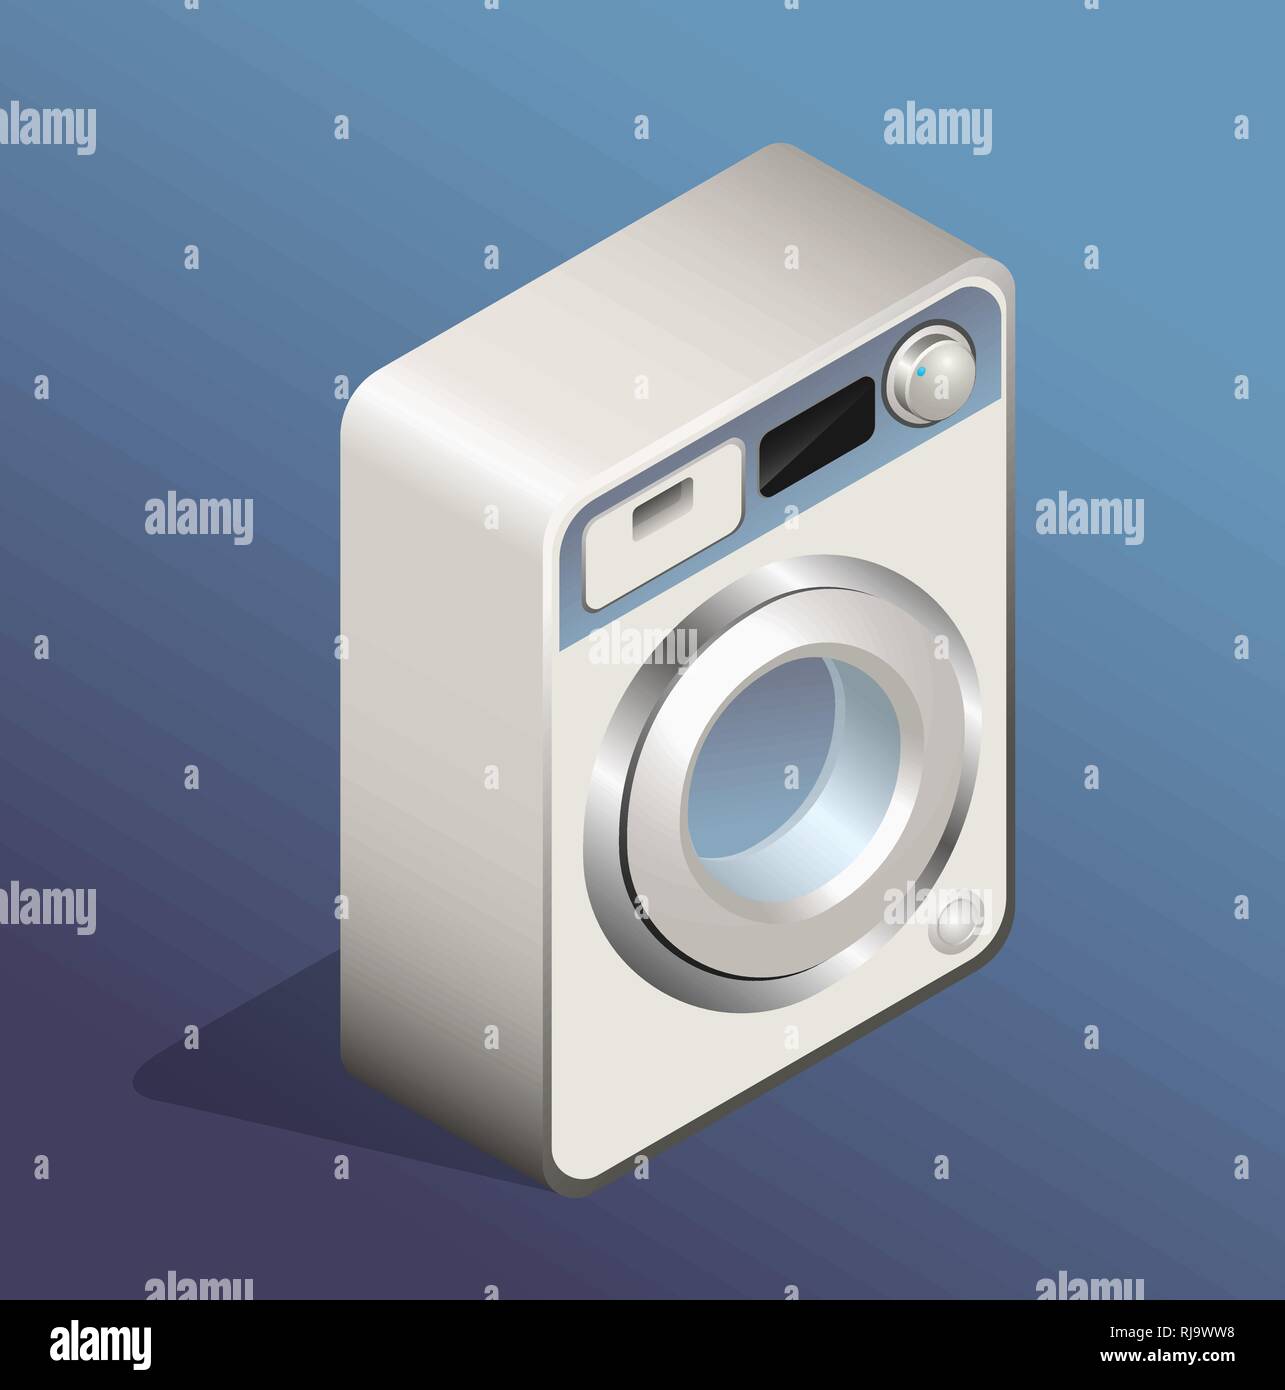 Isometric icon of washing machine Stock Vector